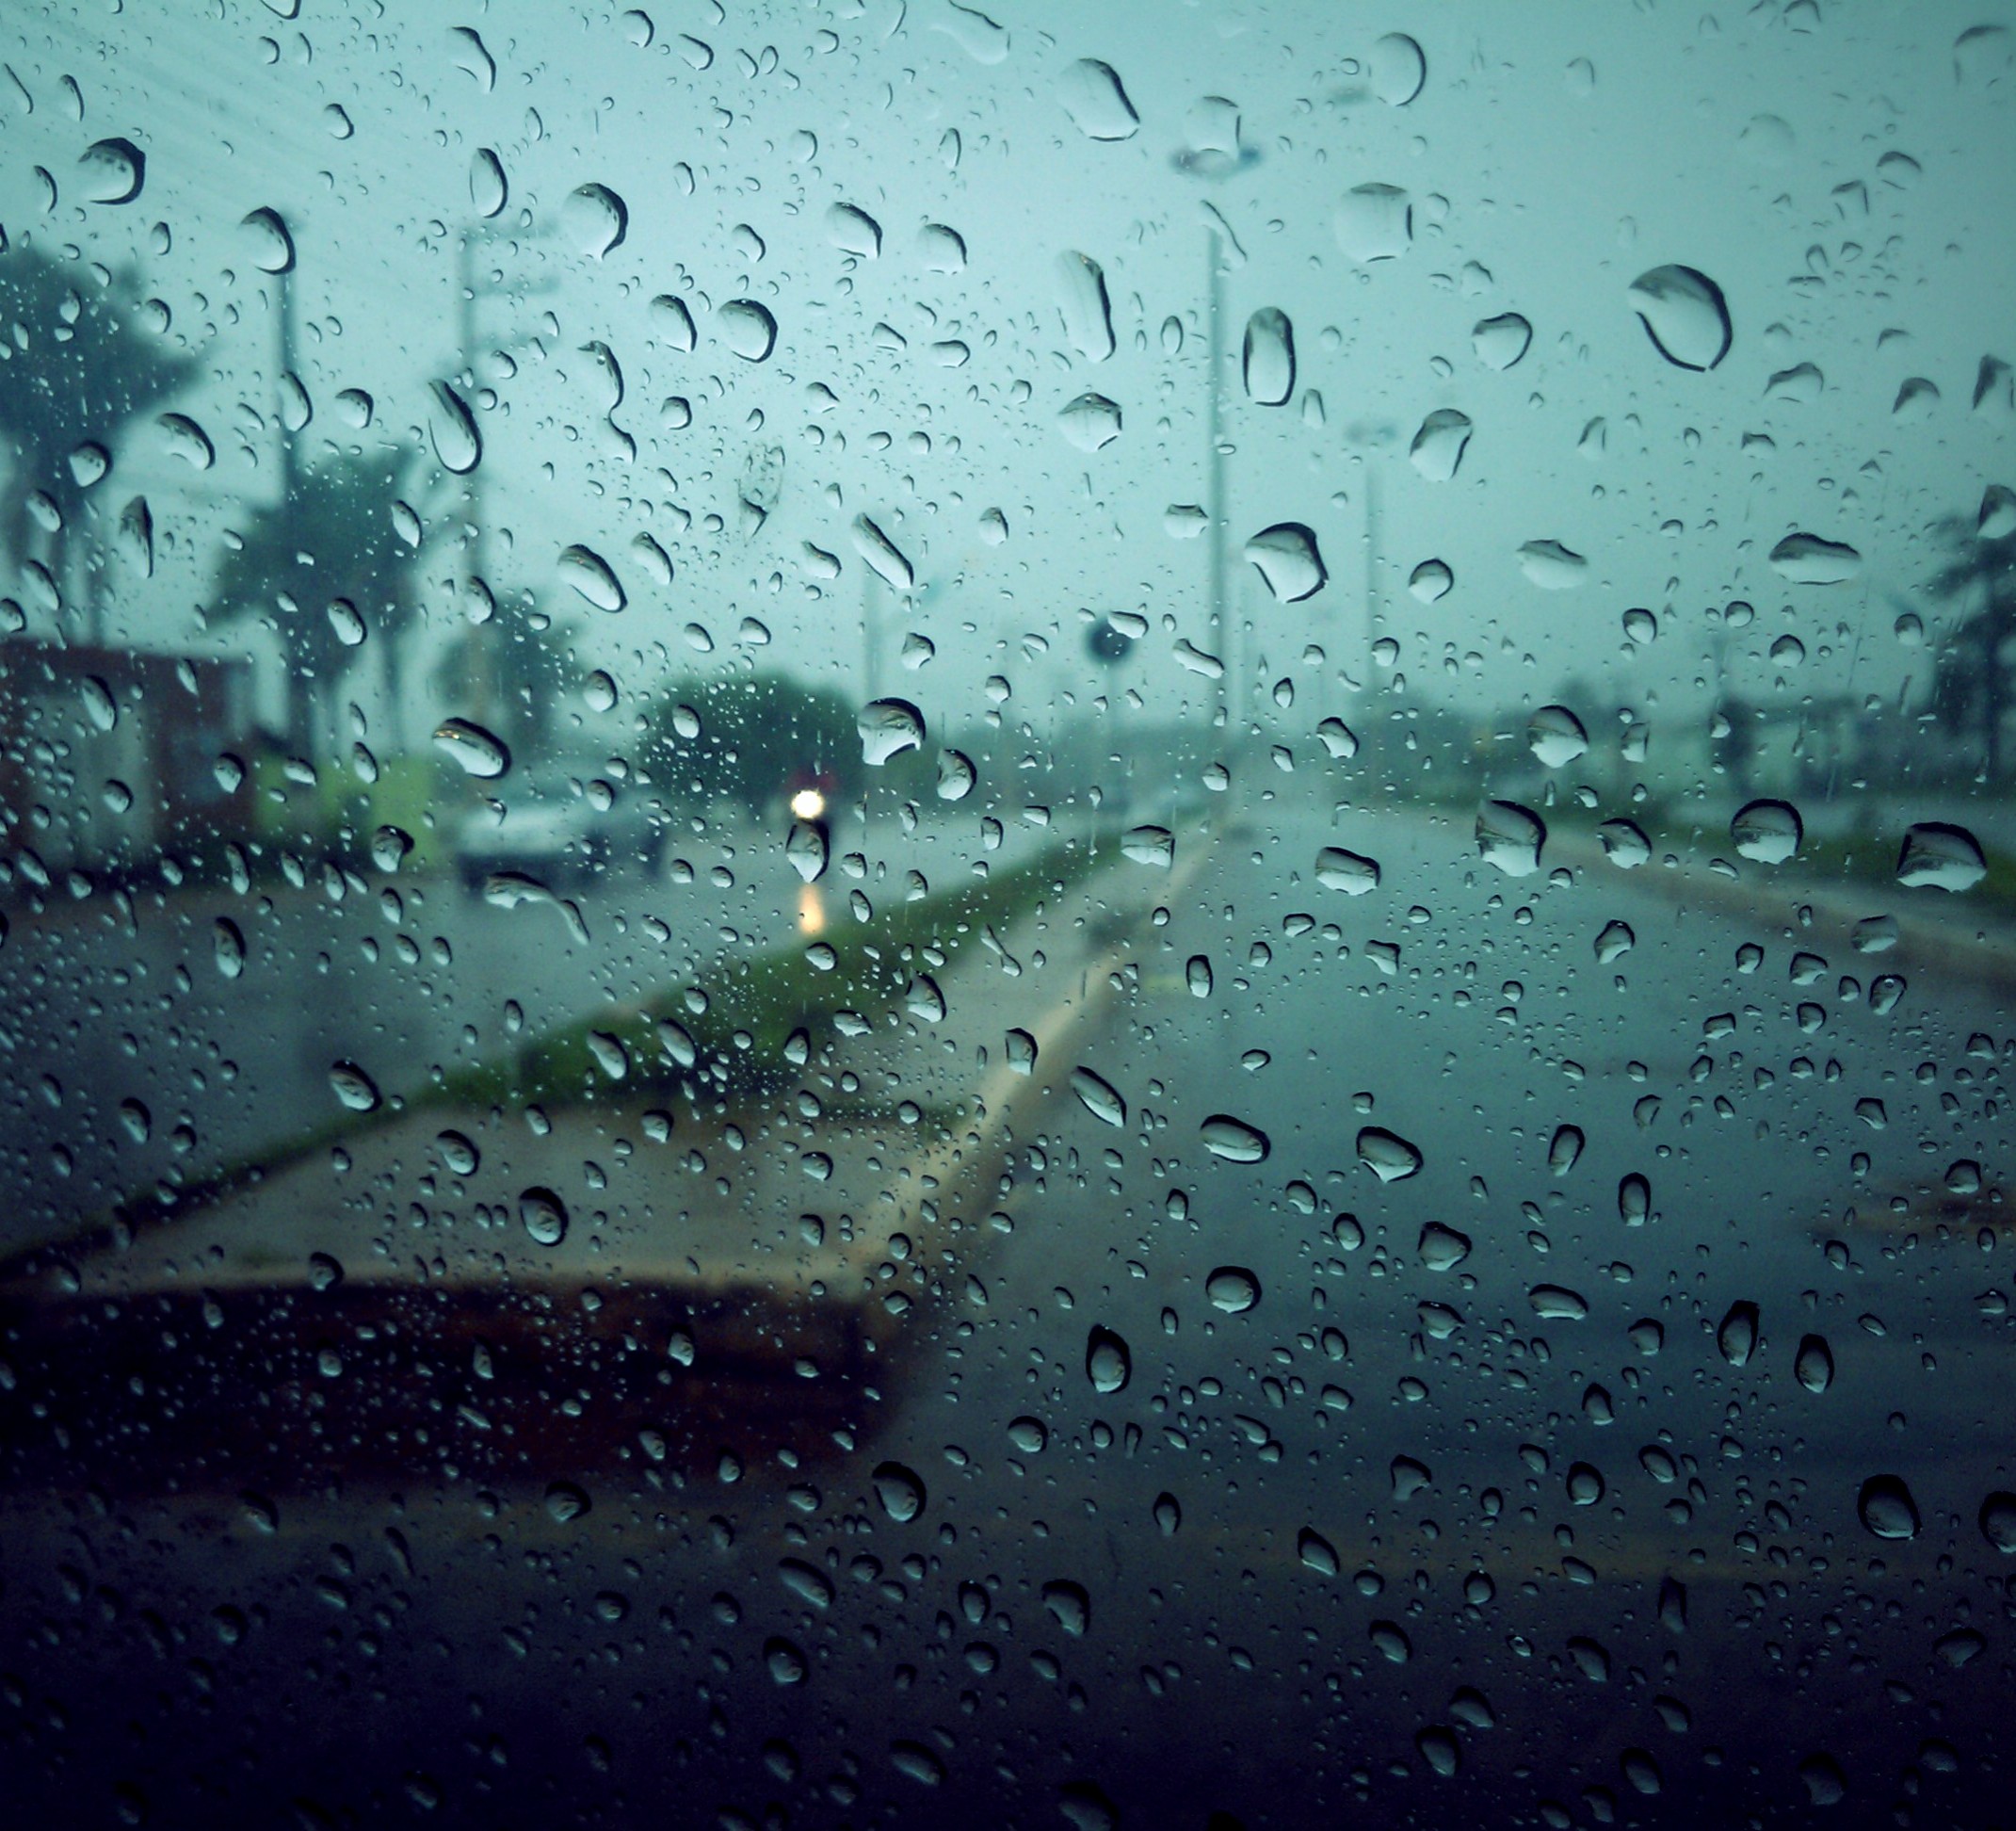 Water Drops Overcast Gloomy Glass Street Rain Water On Glass 2141x1944